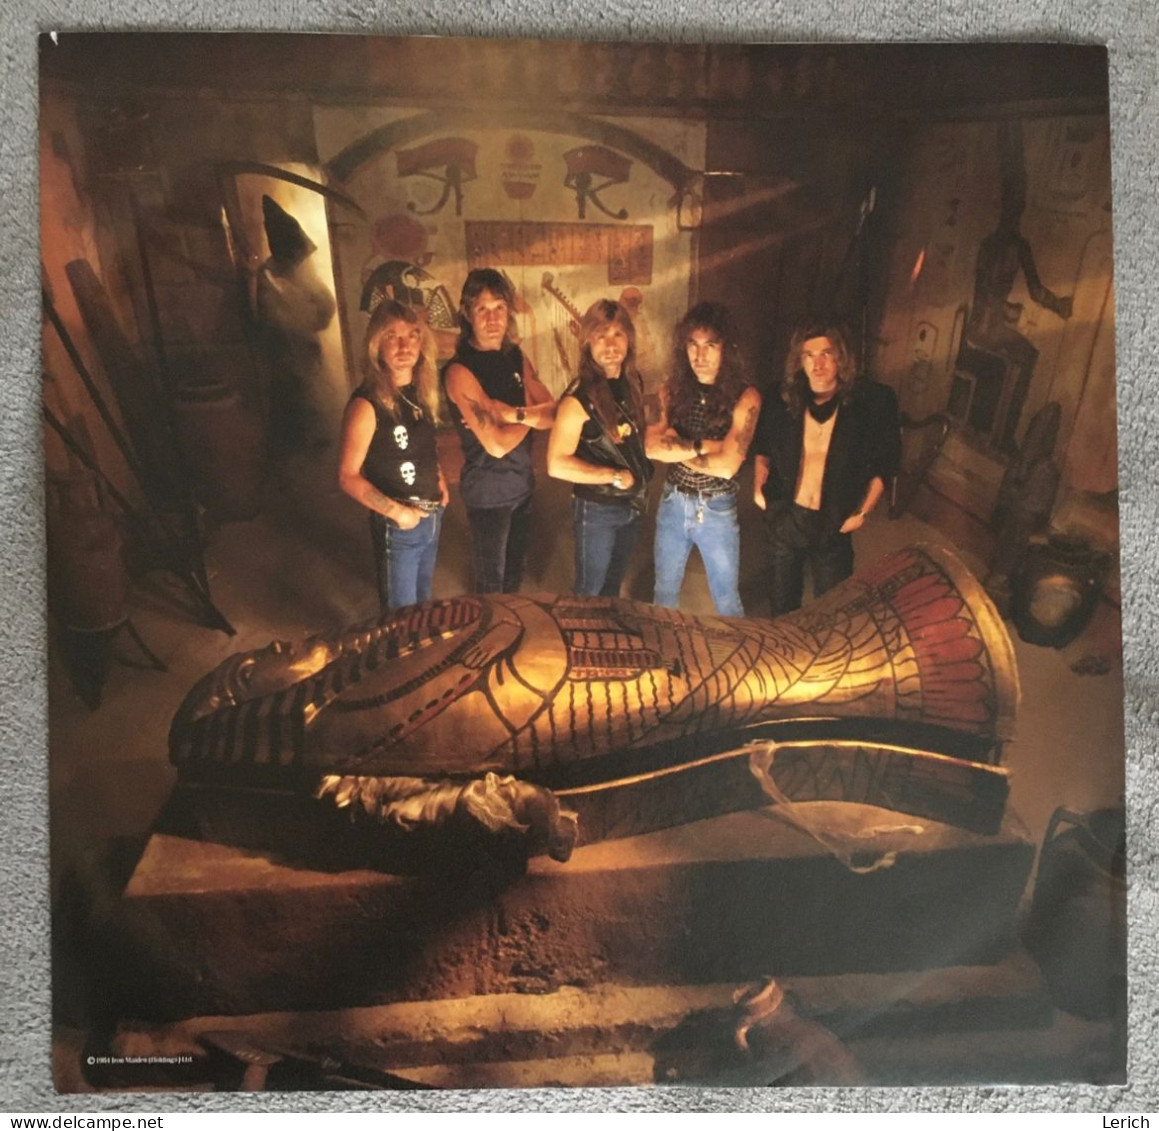 Iron Maiden – Powerslave - Hard Rock & Metal